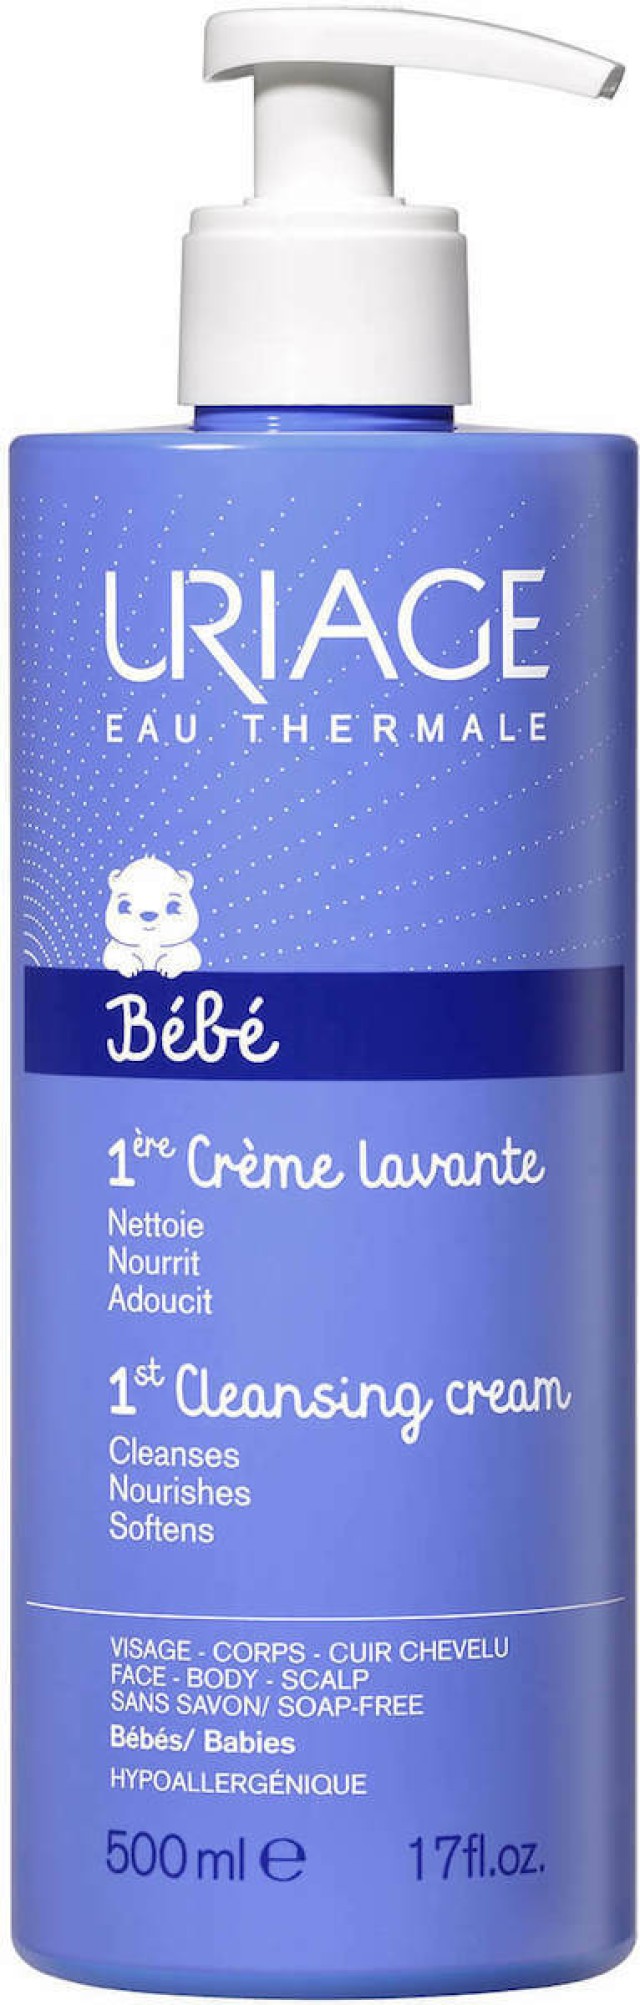 URIAGE Eau Thermale Bebe 1st Cleansing Cream, Γαλάκτωμα Σώματος για το Ευαίσθητο Βρεφικό Δέρμα, 500ml